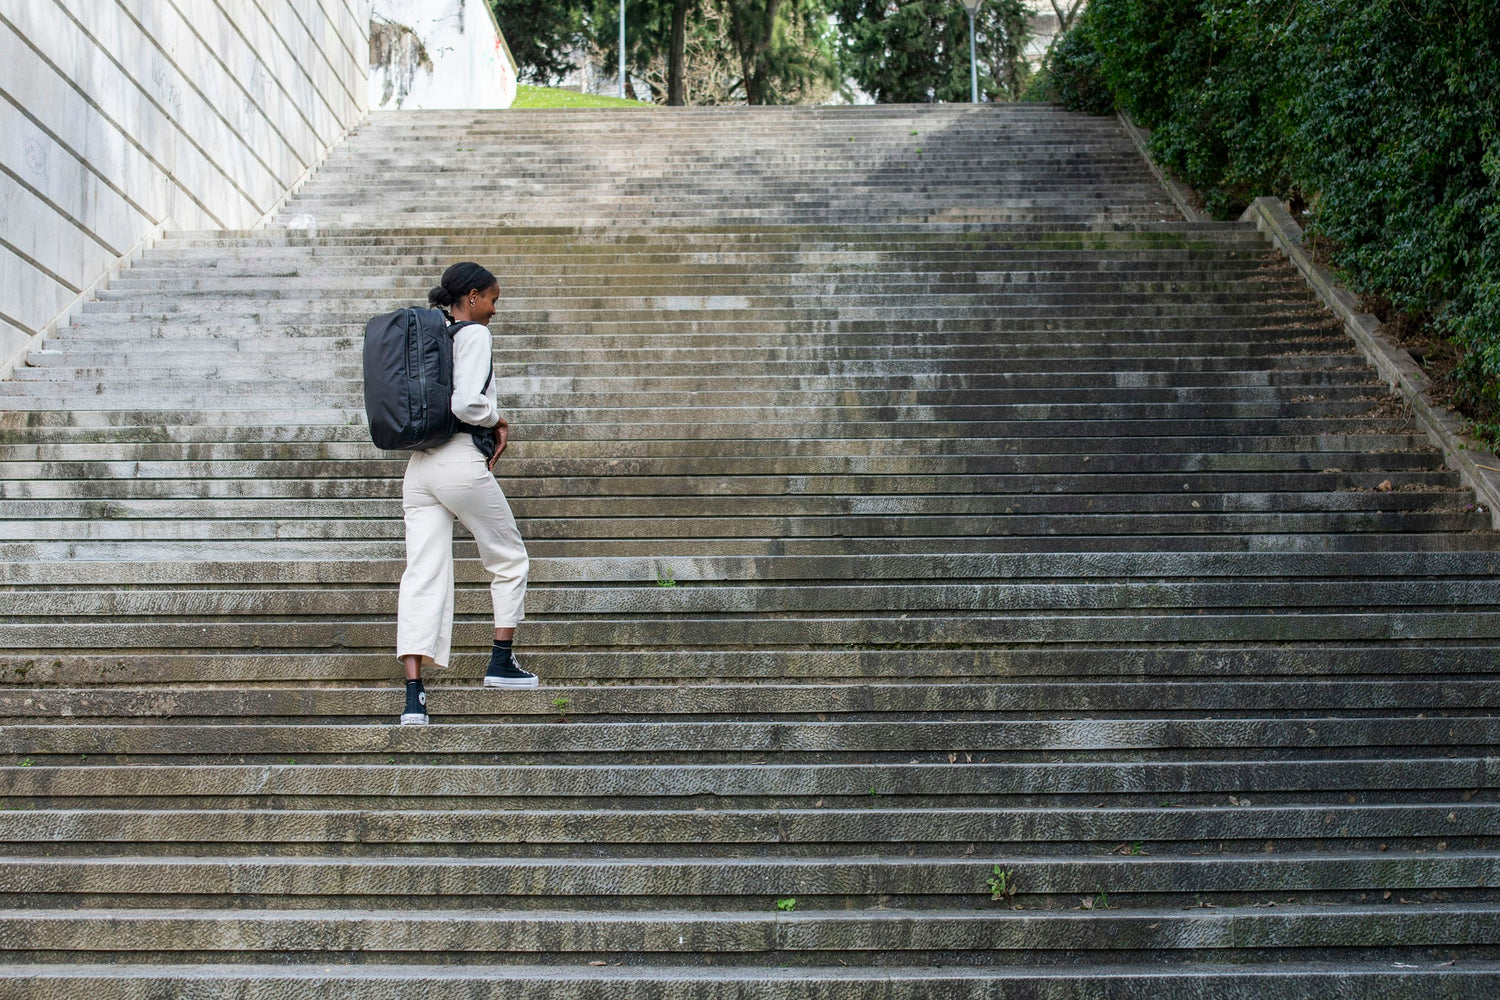 Woman walking on stairs wearing backpack